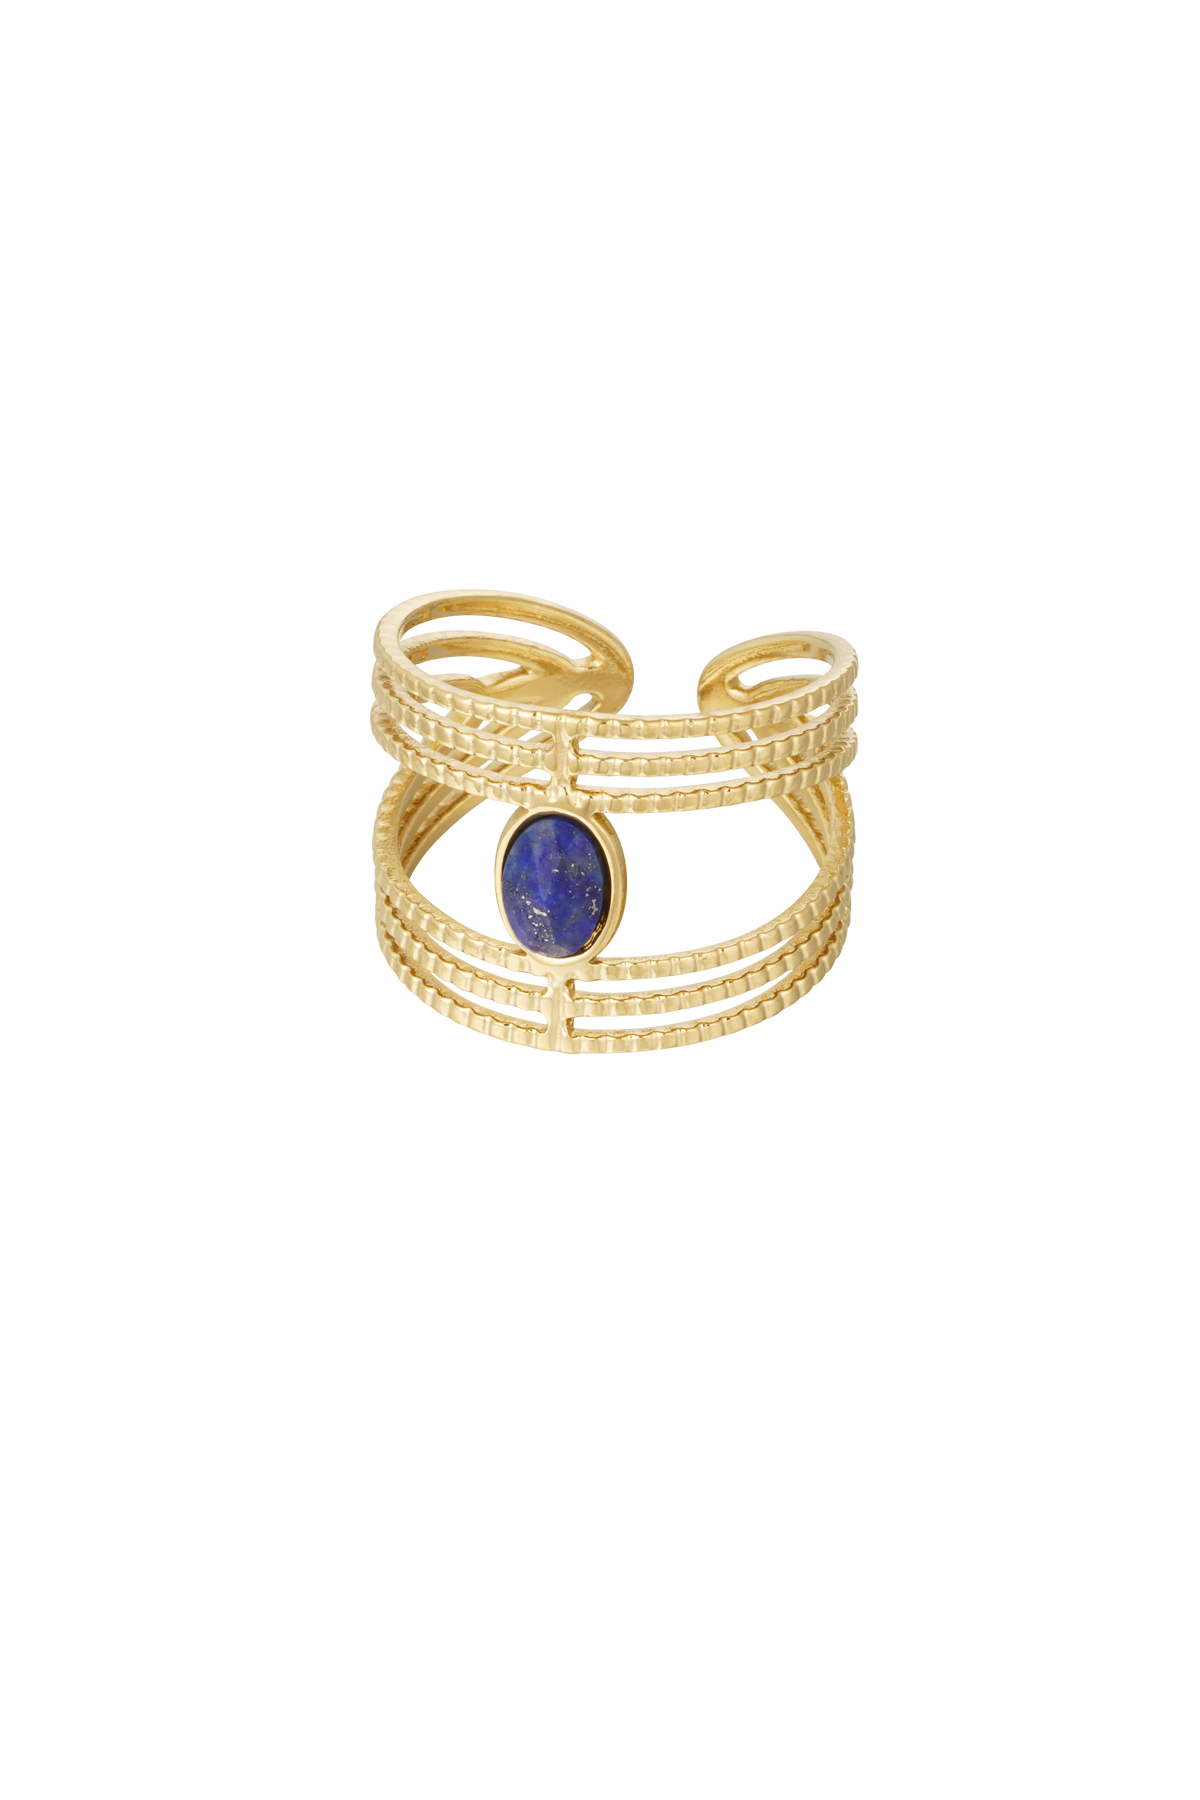 Llamativo anillo elegante con piedra - dorado/azul